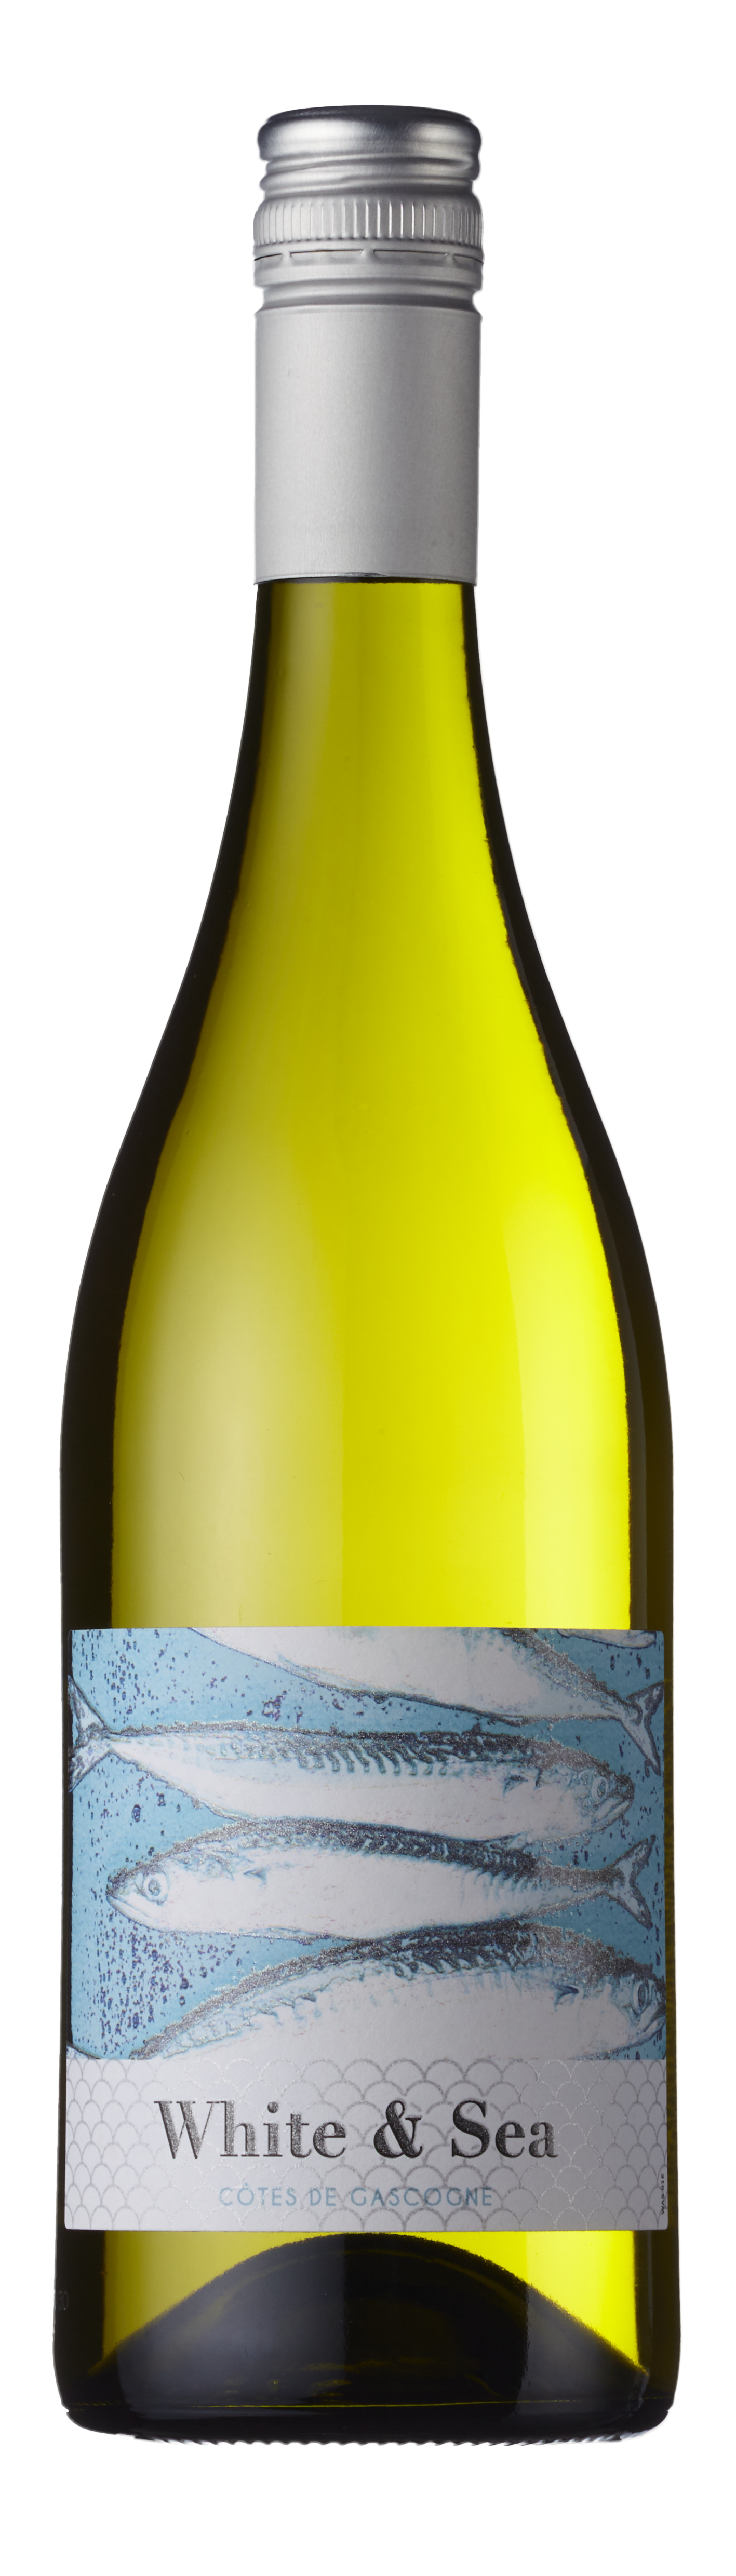 White & Sea, Colombard, Wine Sauvignon - 2022 Alliance Côtes de Blanc, Gascogne, IGP France